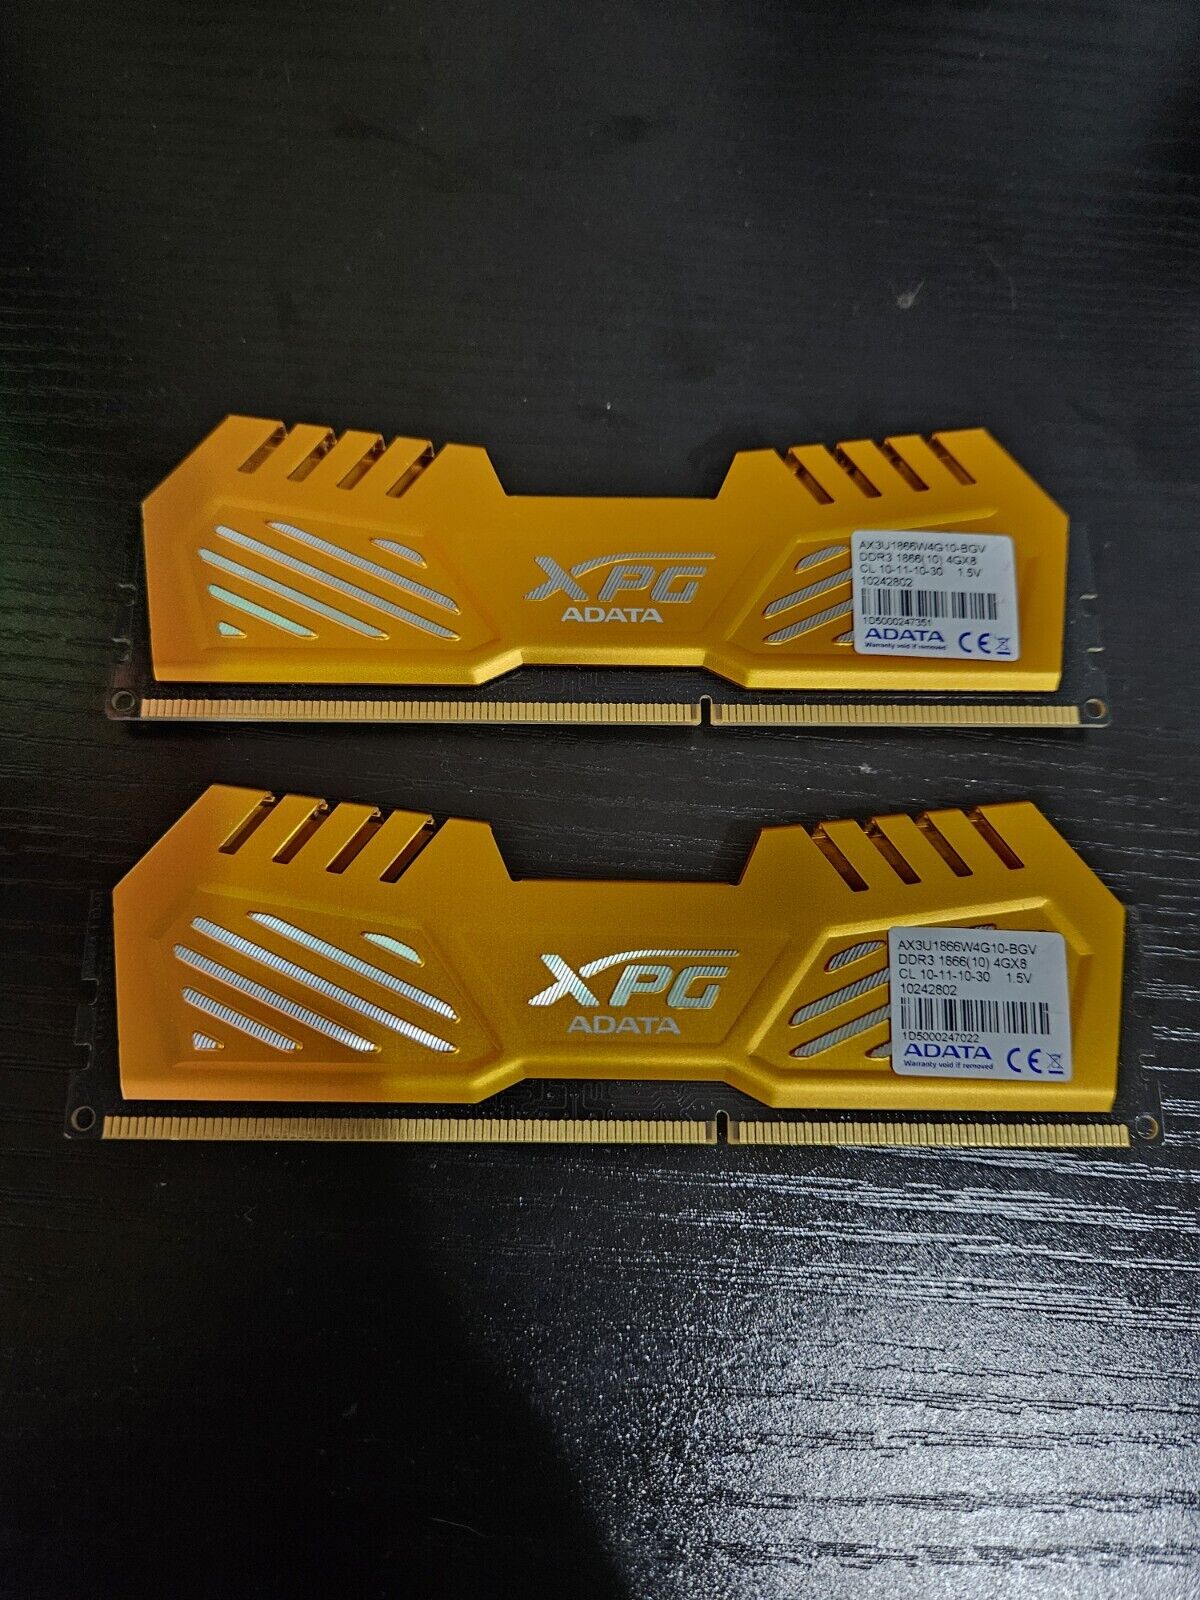 Adata XPG 4GB DDR3 1866MHz Desktop Memory RAM AX3U1866W4G10-BGV (2x4GB) 8GB  bol